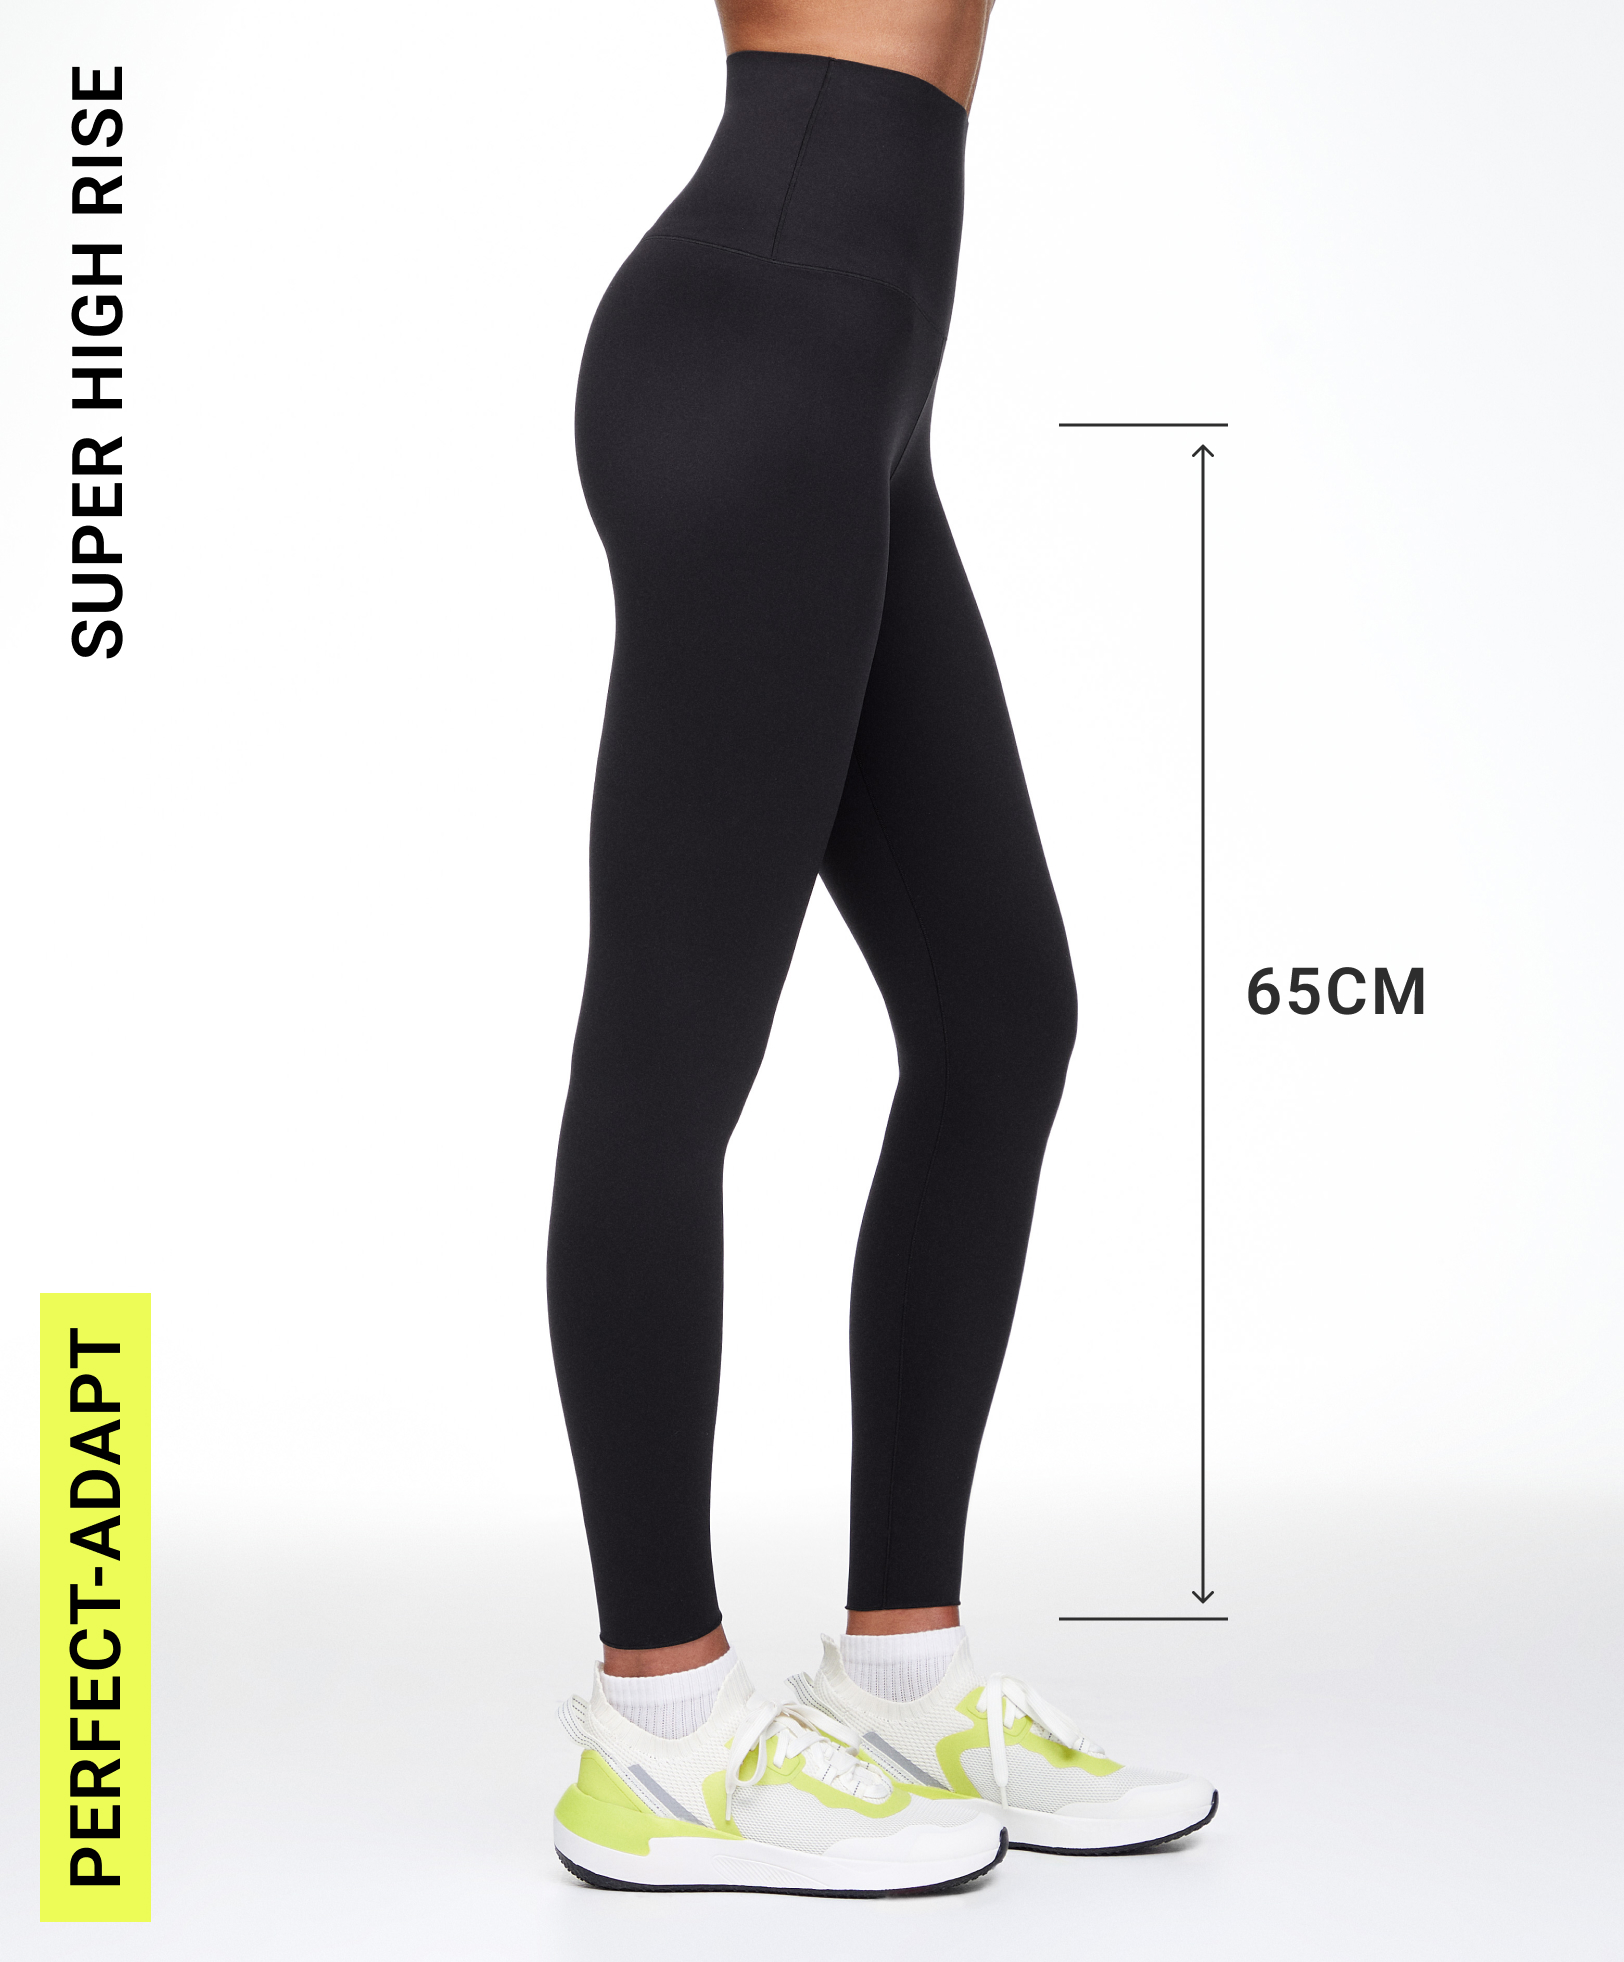 Perfect Adapt super-high-rise 65cm ankle-length leggings